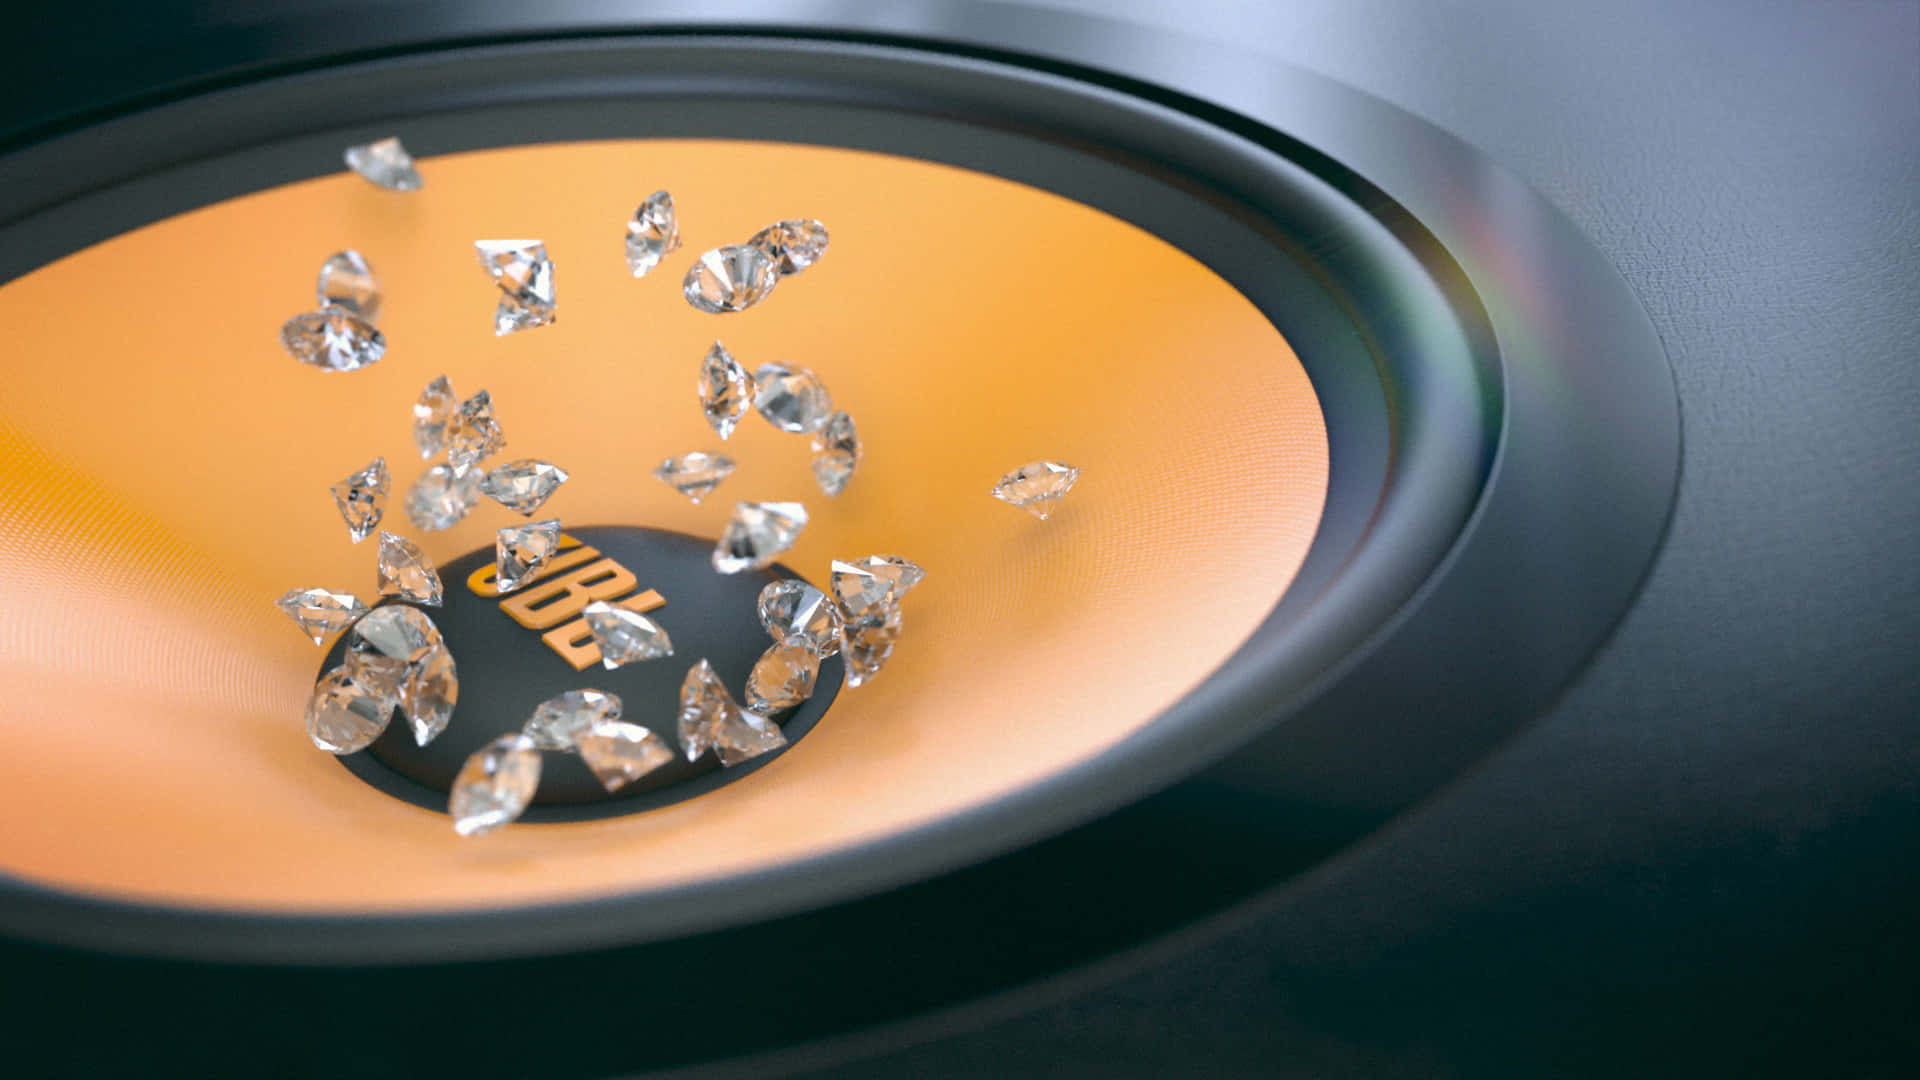 JBL's Luxurious Speaker with Diamonds Wallpaper